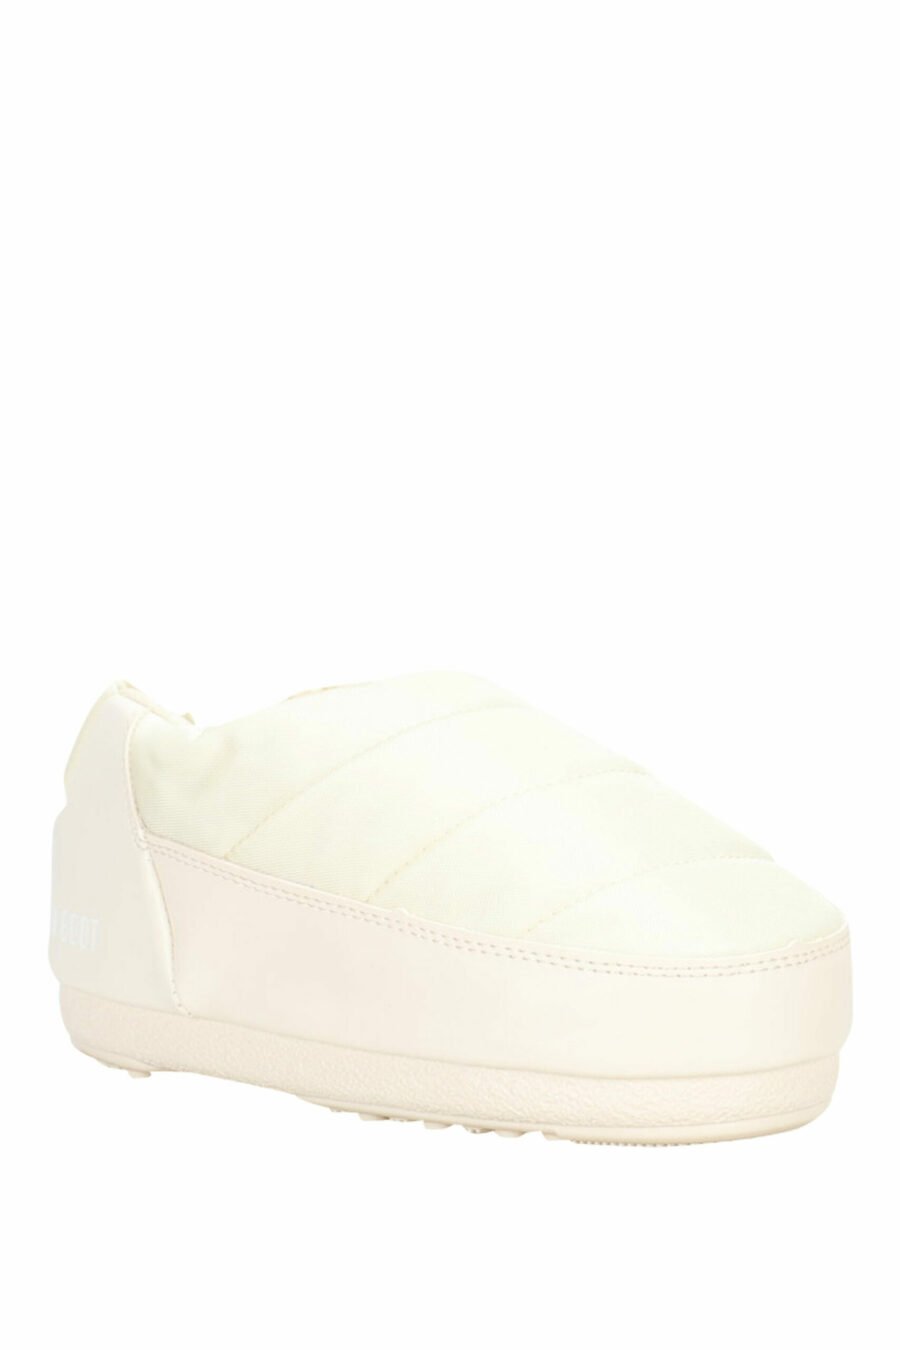 White sandals with white mini-logo - 8050032004080 2 scaled